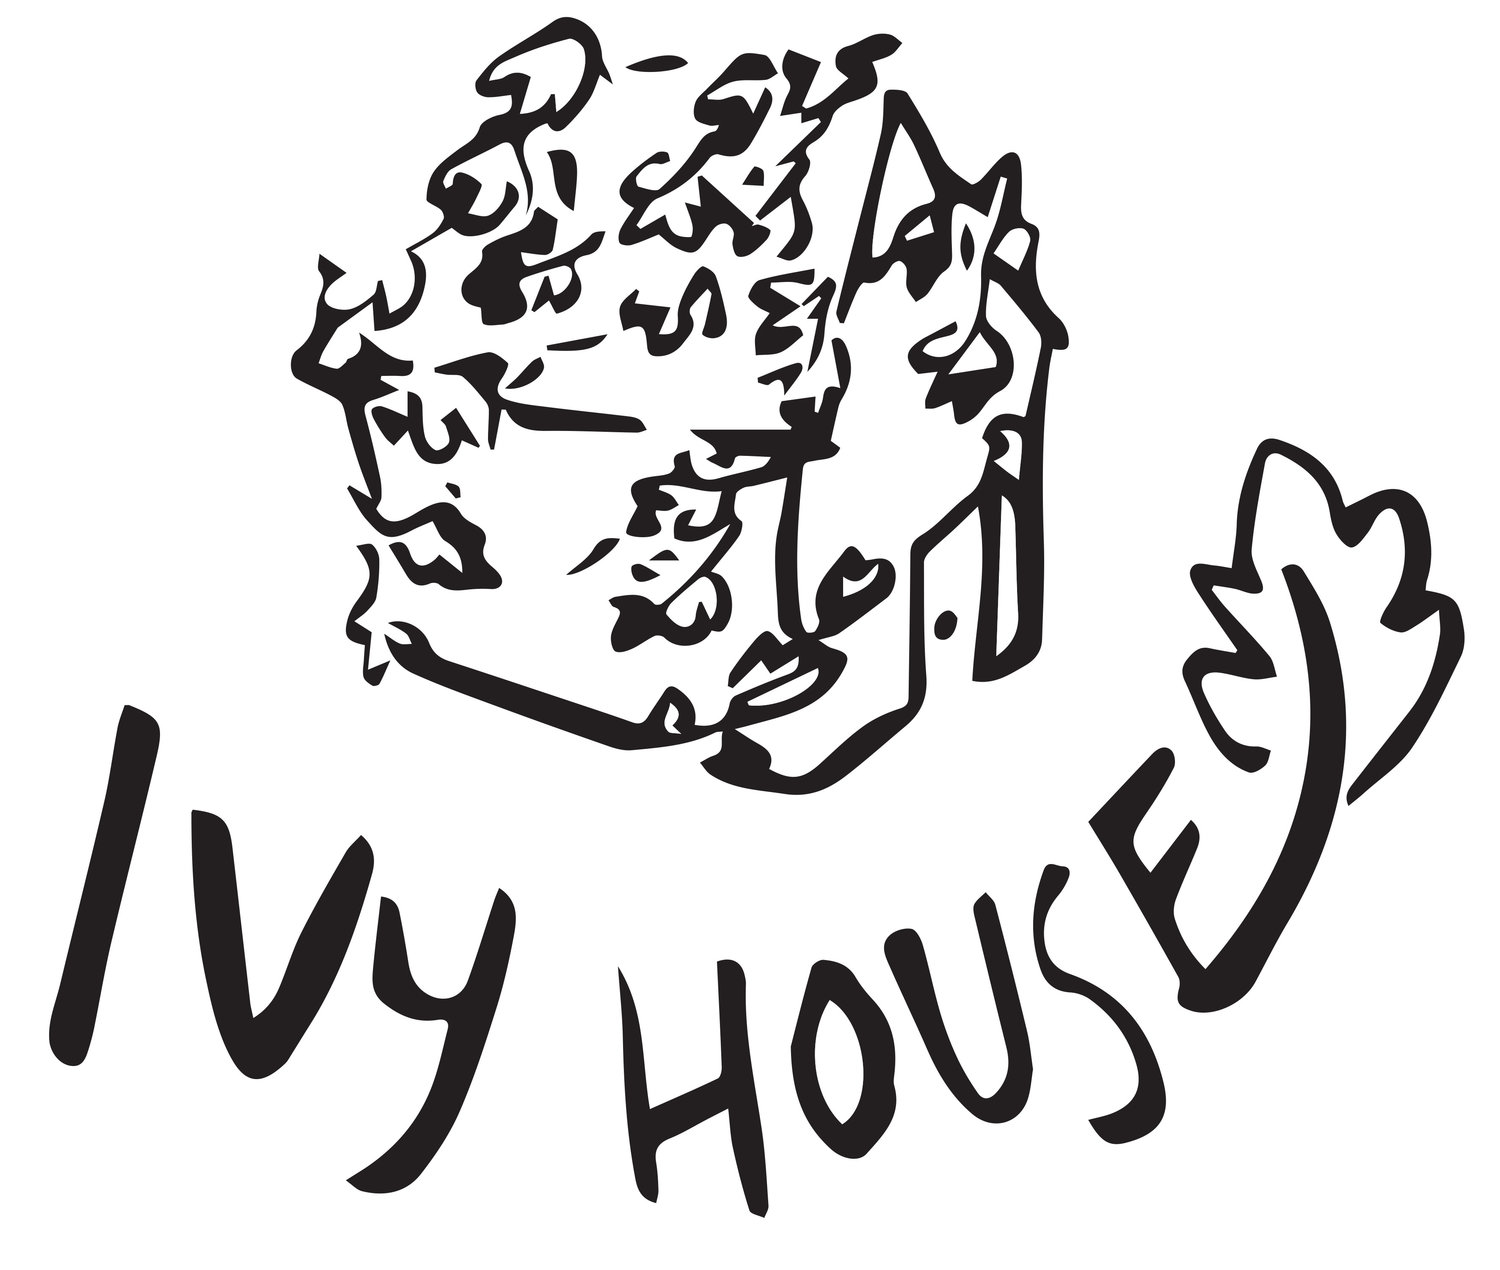 Ivy House Design